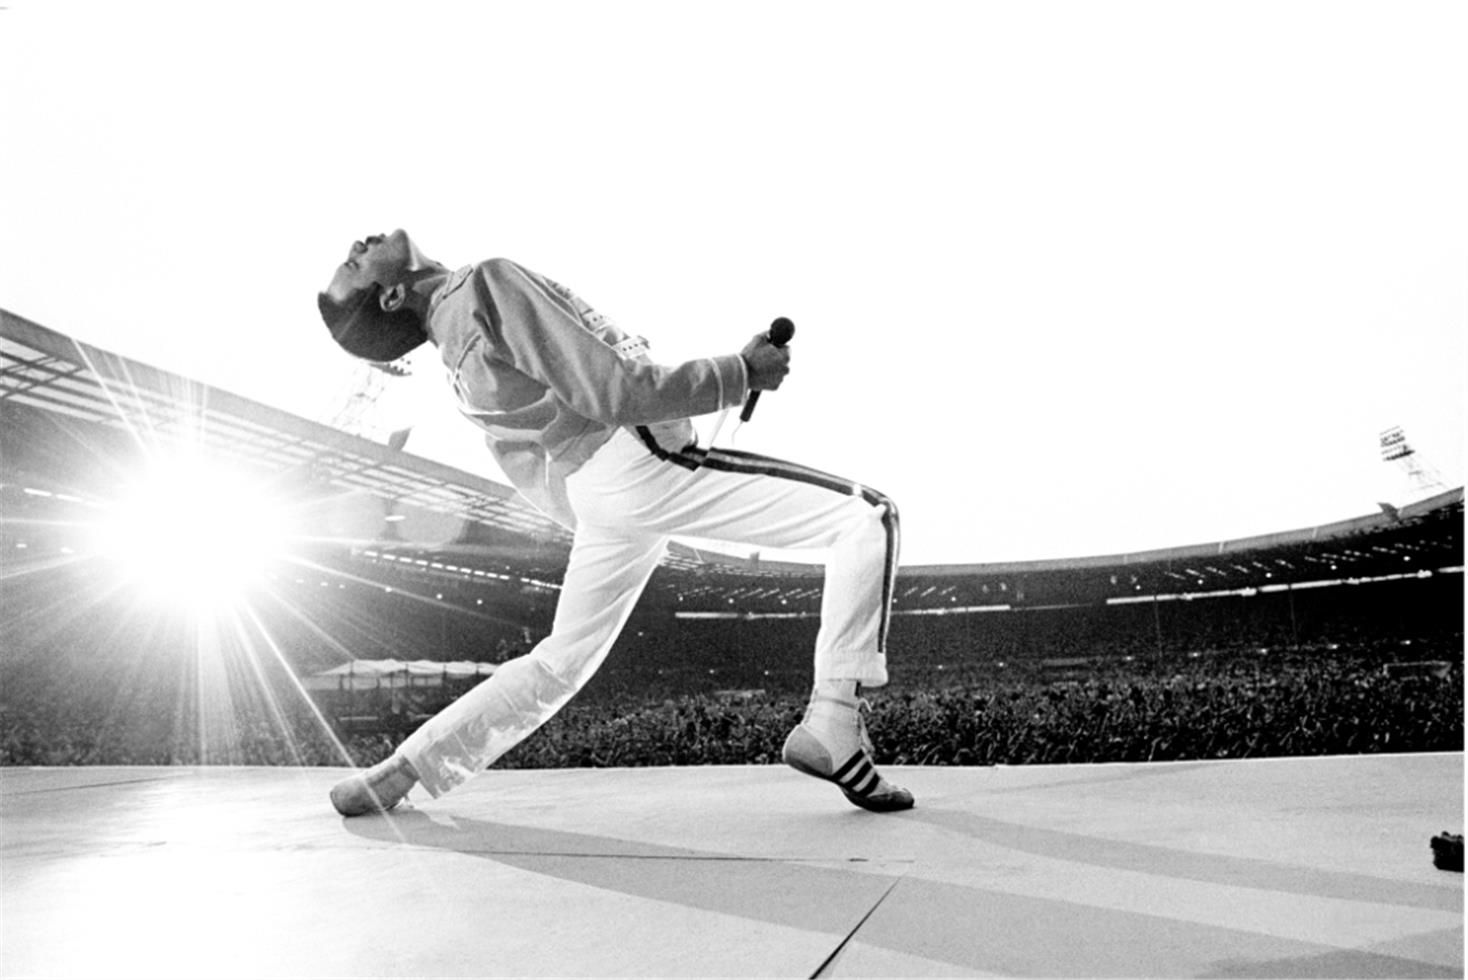 Freddie Mercury with Queen at Wembley Stadium in 1986